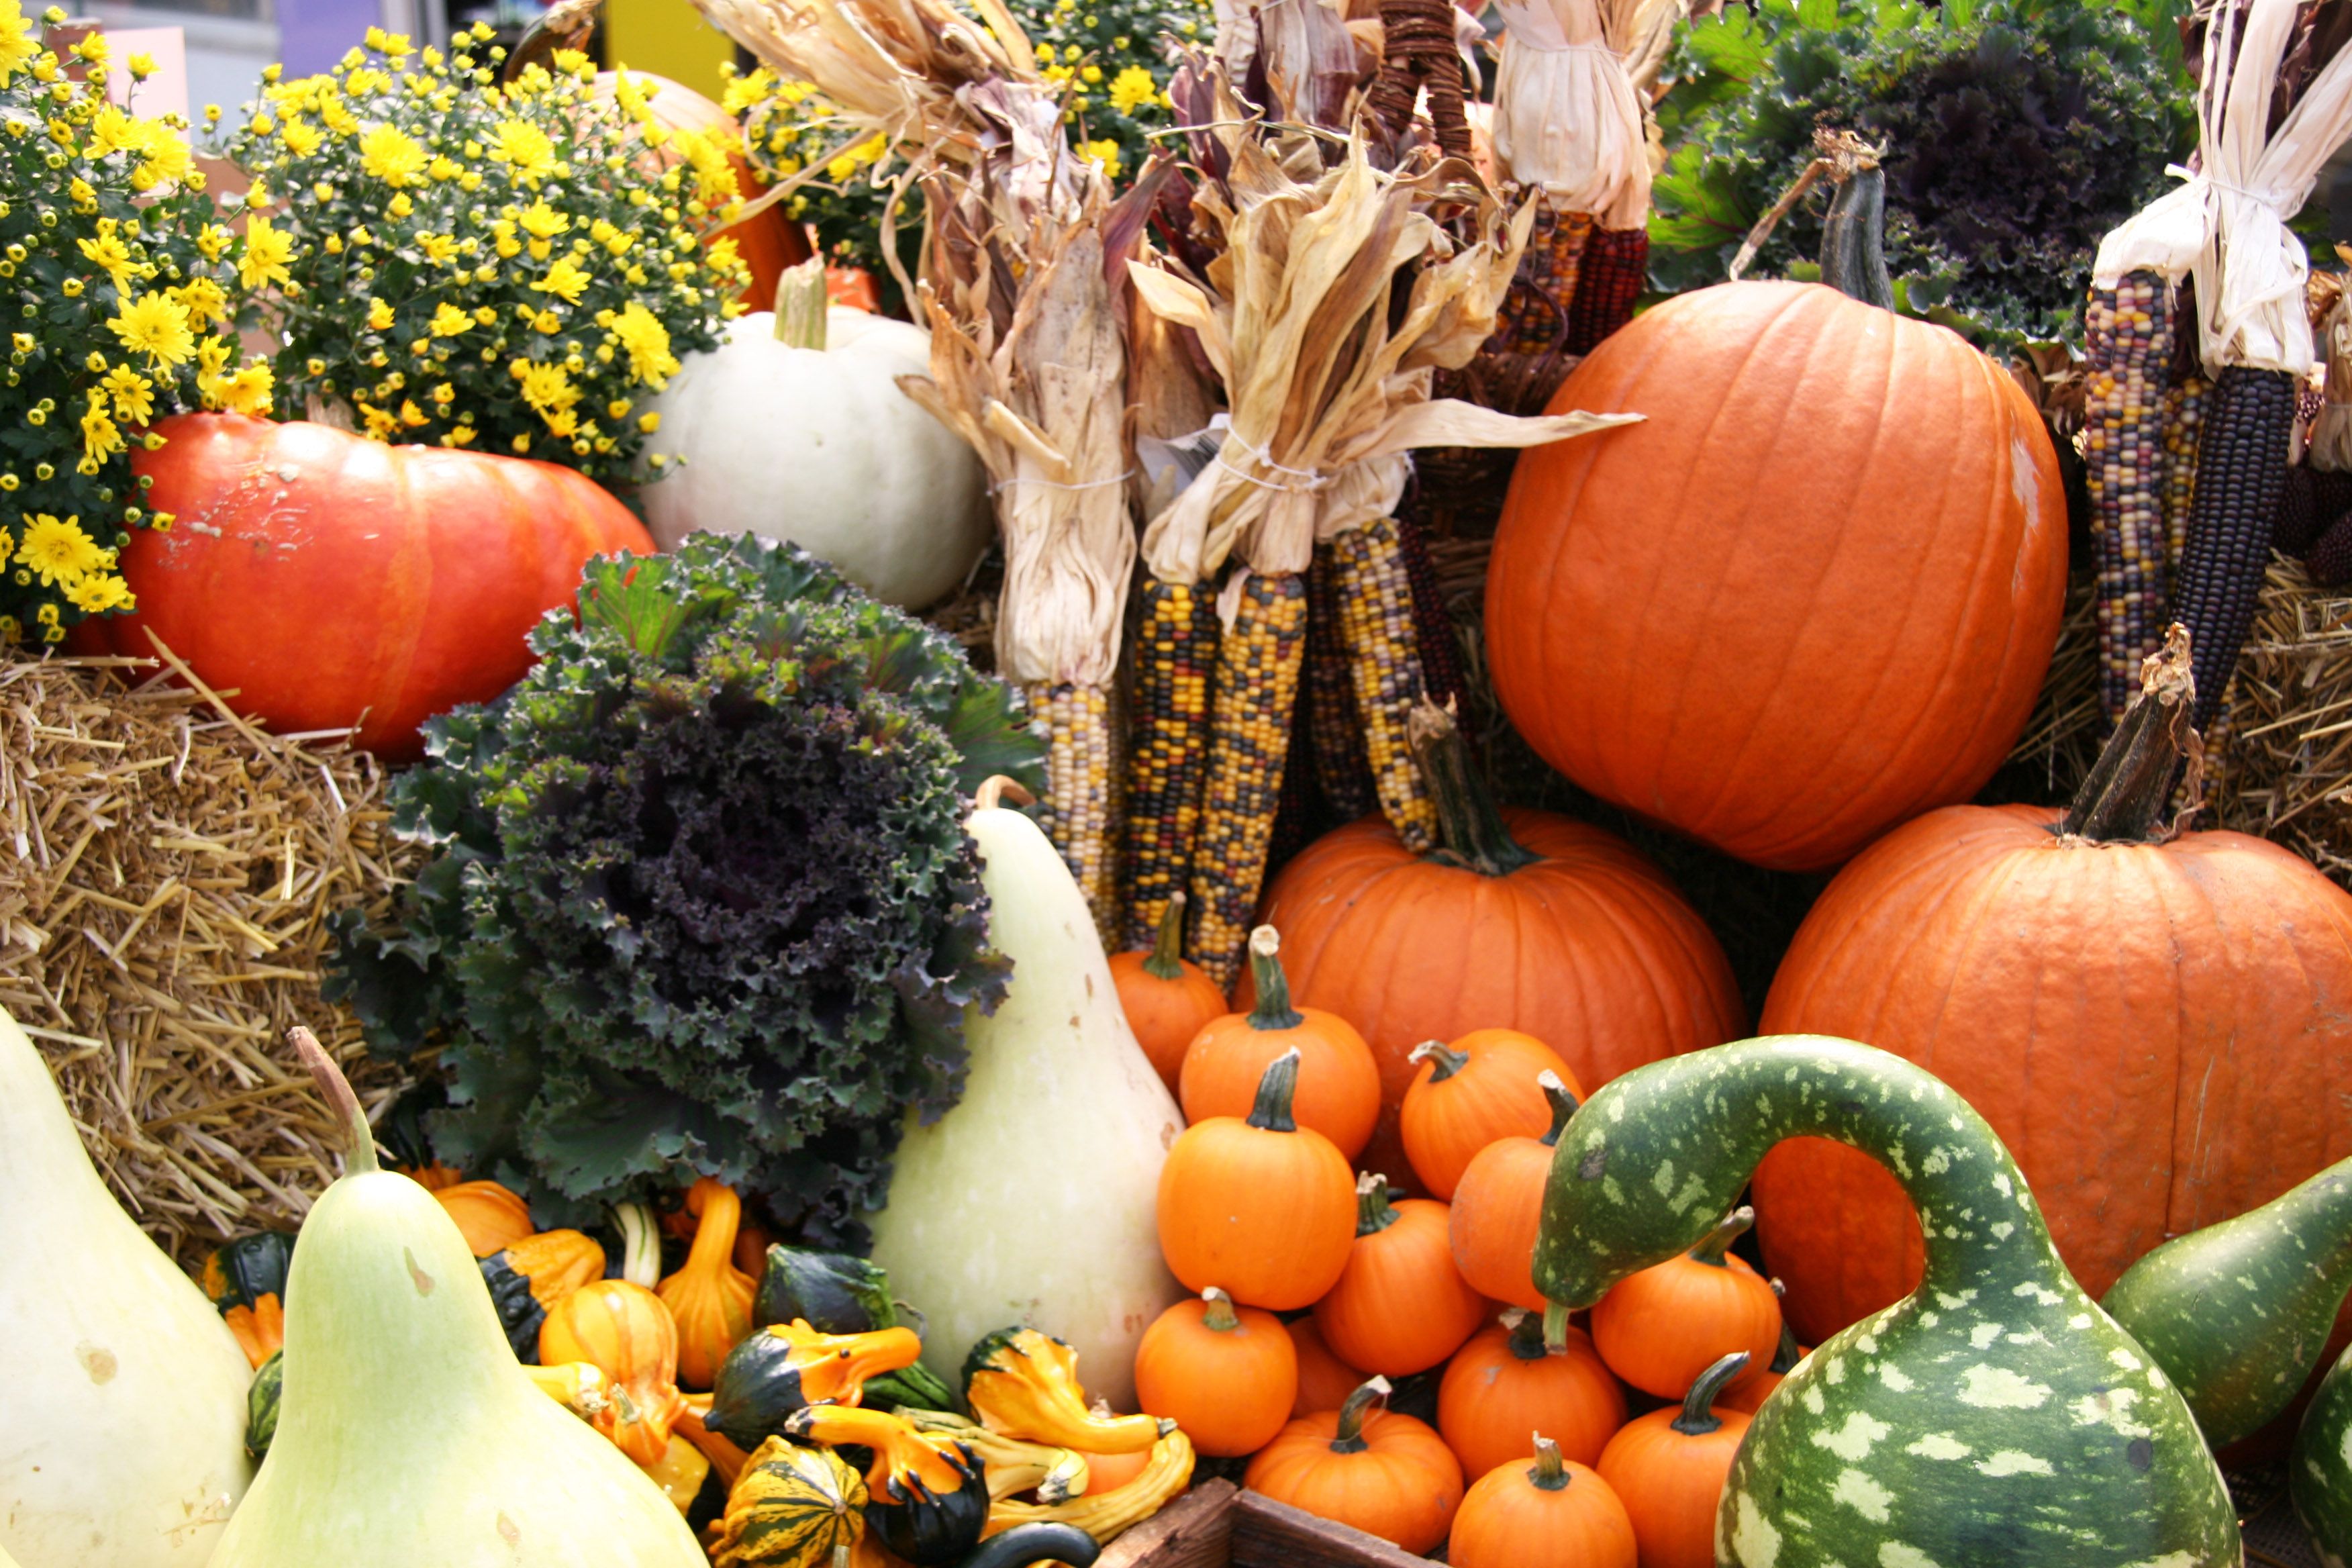 Fall harvest market at TERRA (pumpkins, gourds, kale, corn stalks ...